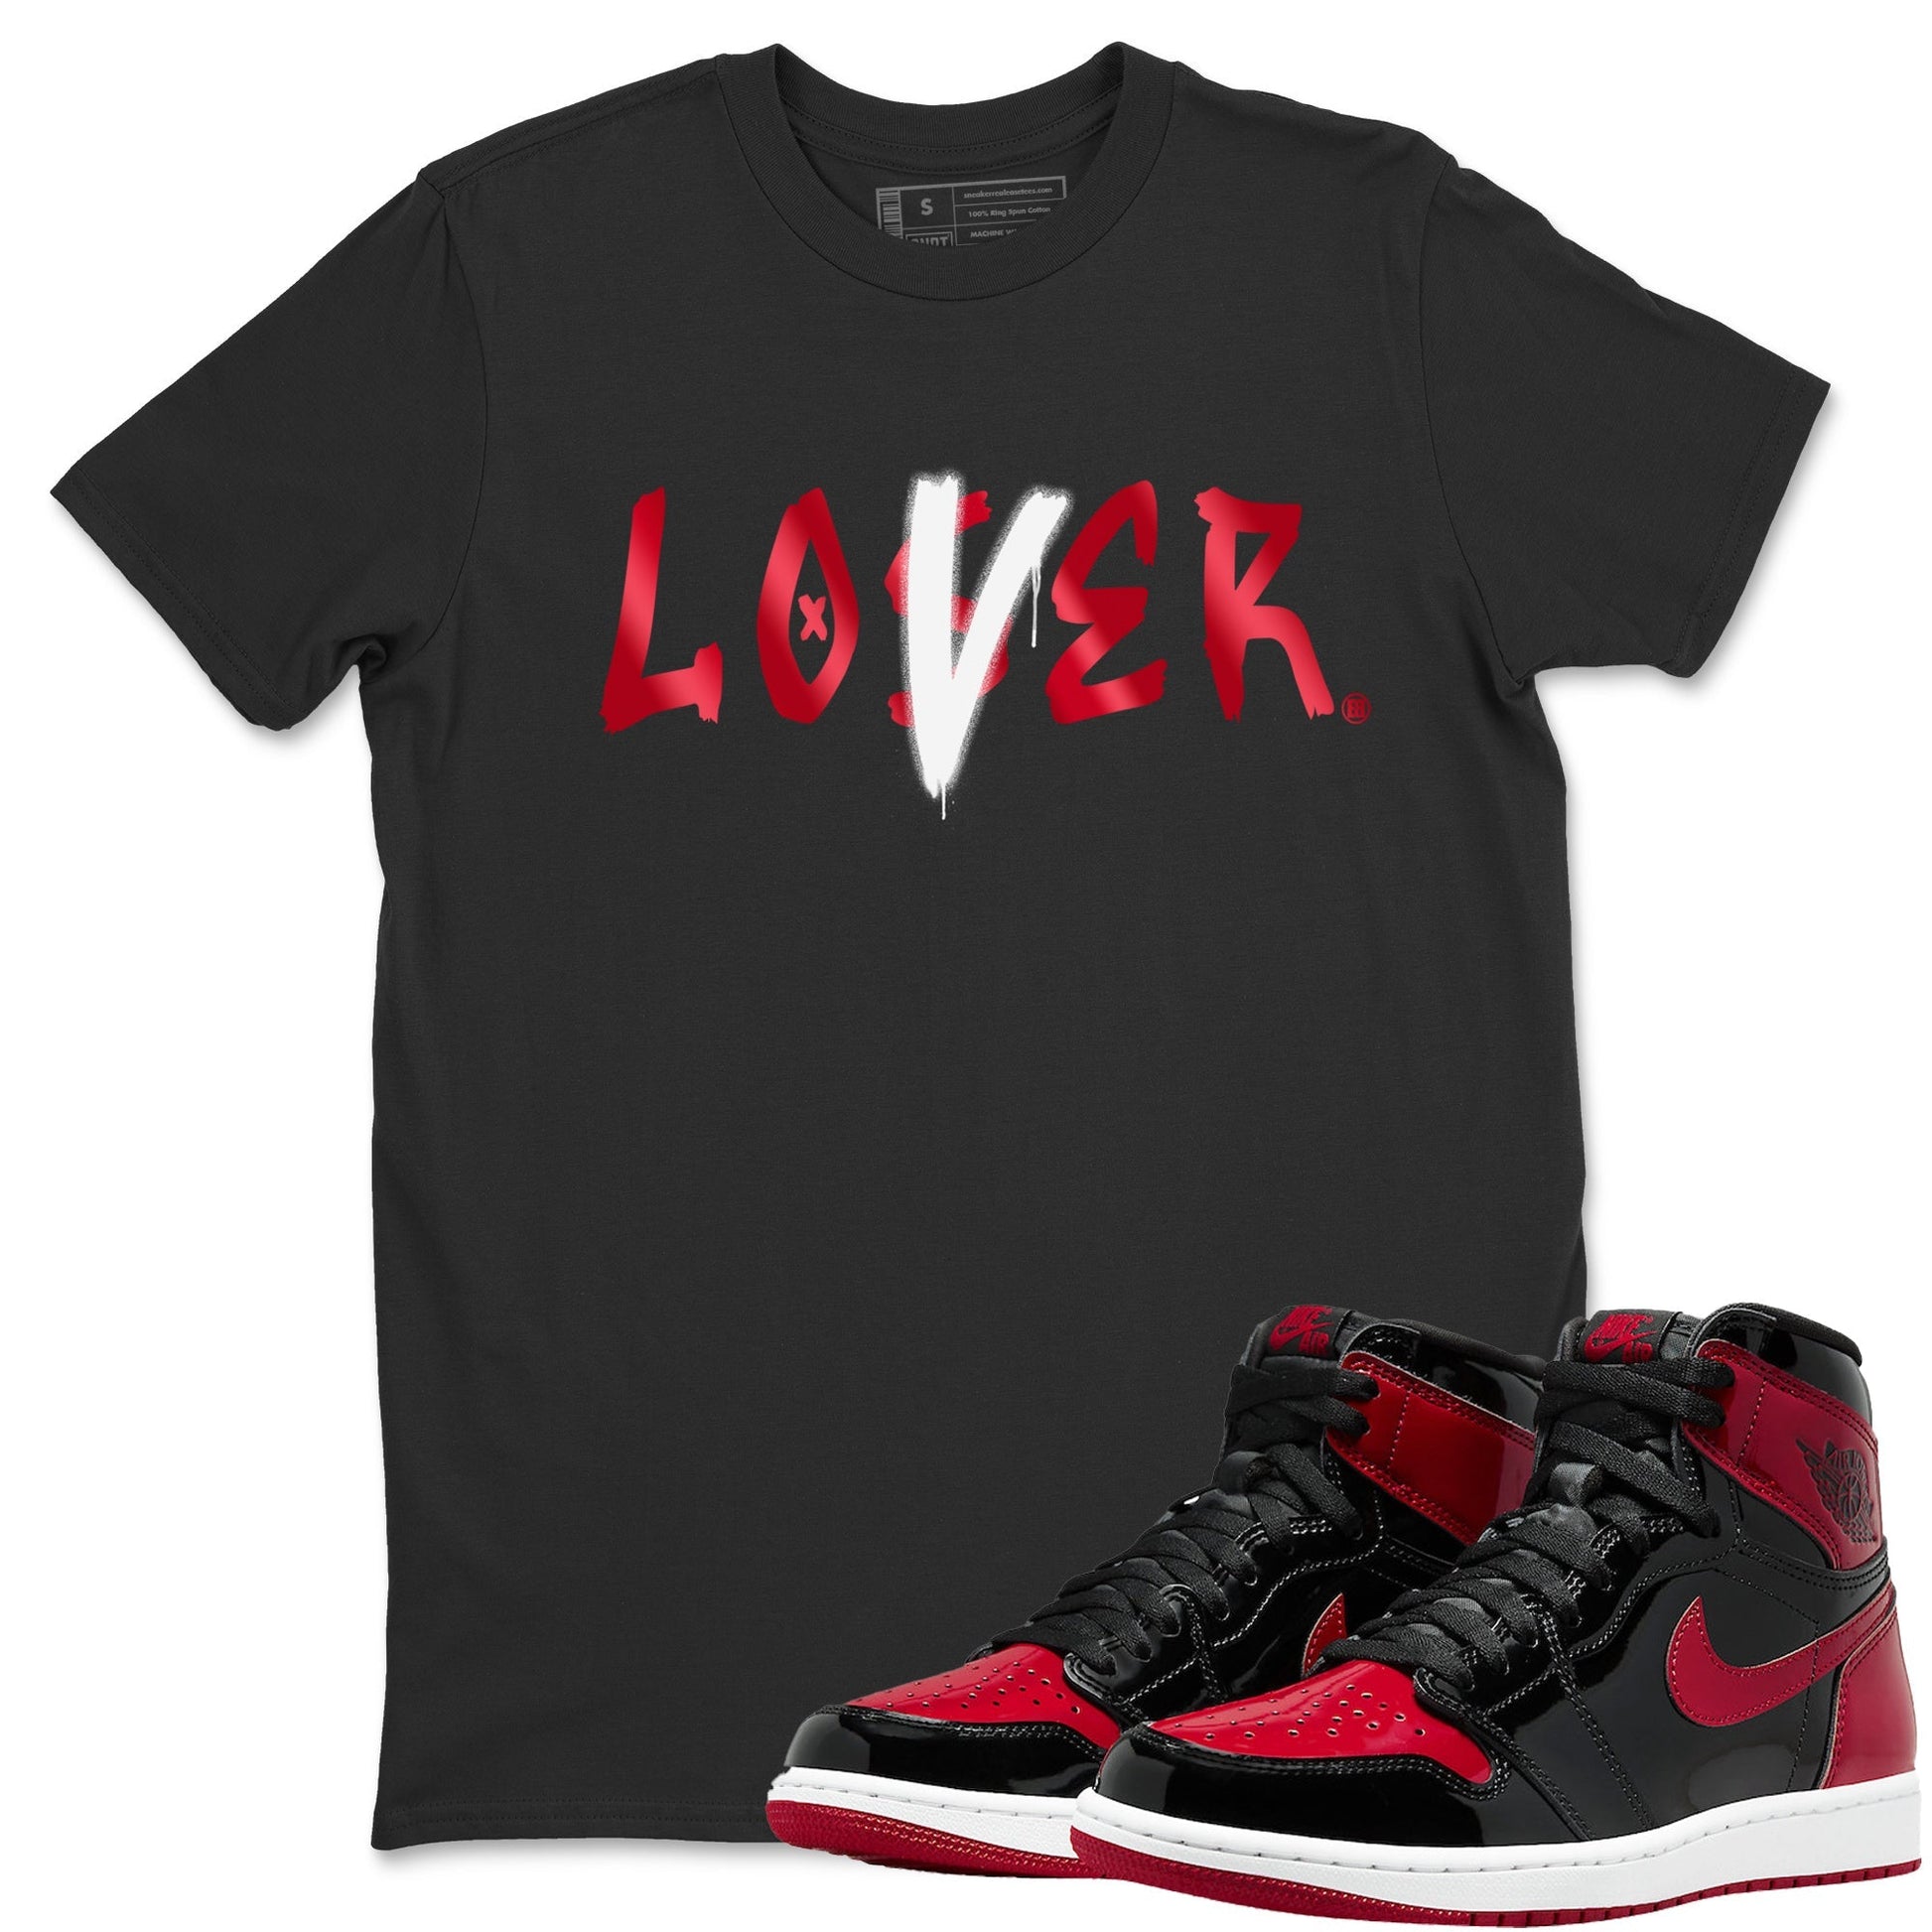 Jordan 1 Bred Patent Sneaker Match Tees Loser Lover Sneaker Tees Jordan 1 Bred Patent Sneaker Release Tees Unisex Shirts